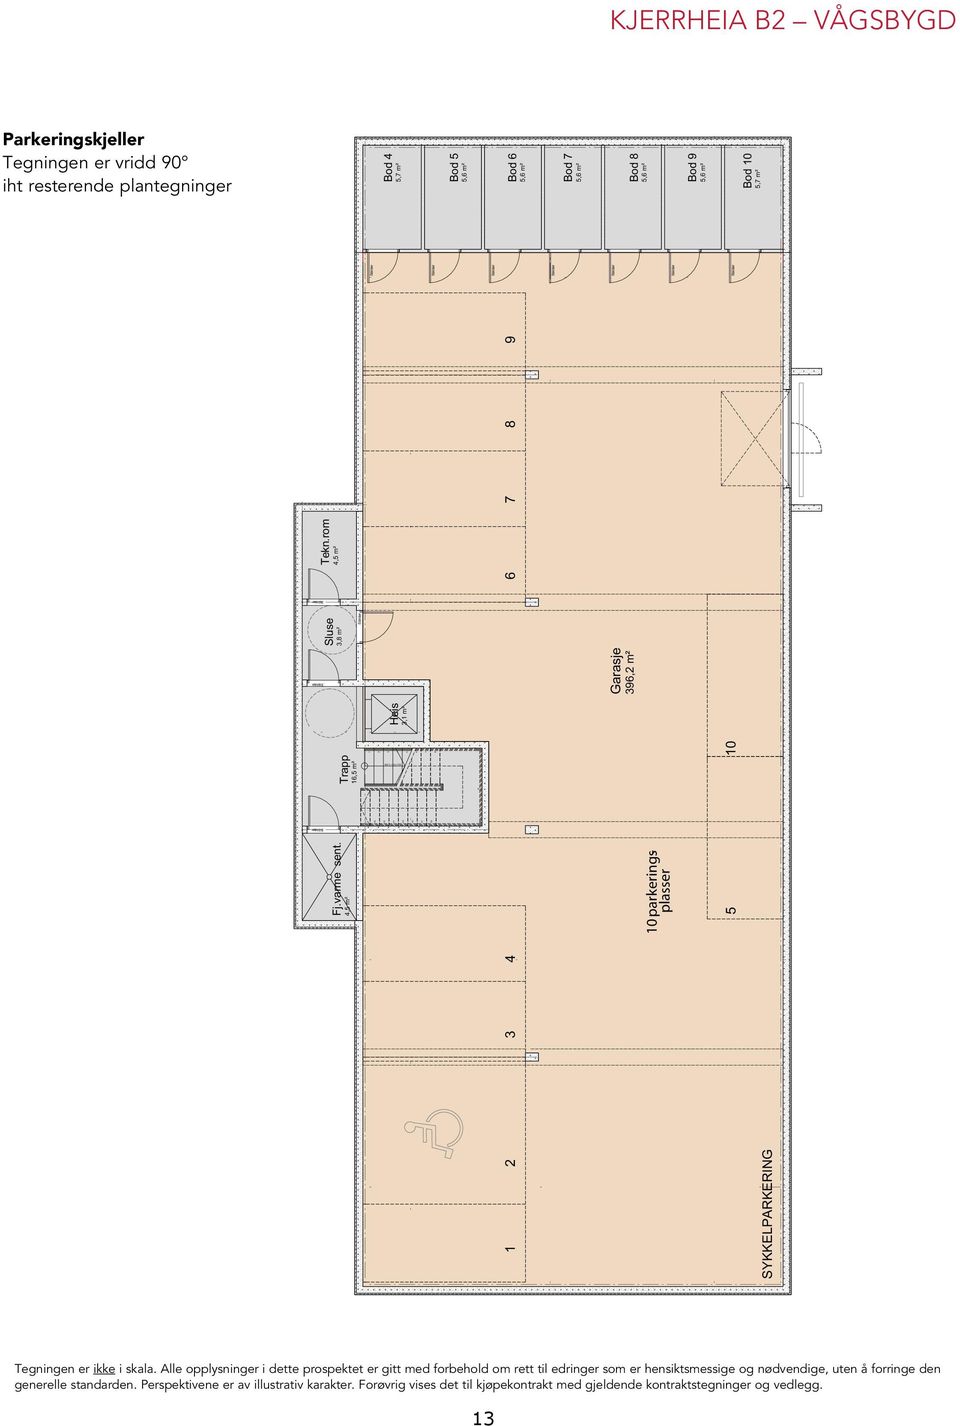 10 parkeringsplasser Sluse 3,8 m² Bod 7 5,6 m² Bod 8 5,6 m² Bod 9 5,6 m² 4,5 m² Trapp 16,5 m² Heis 3,1 m² Garasje 396,2 m² Tekn.